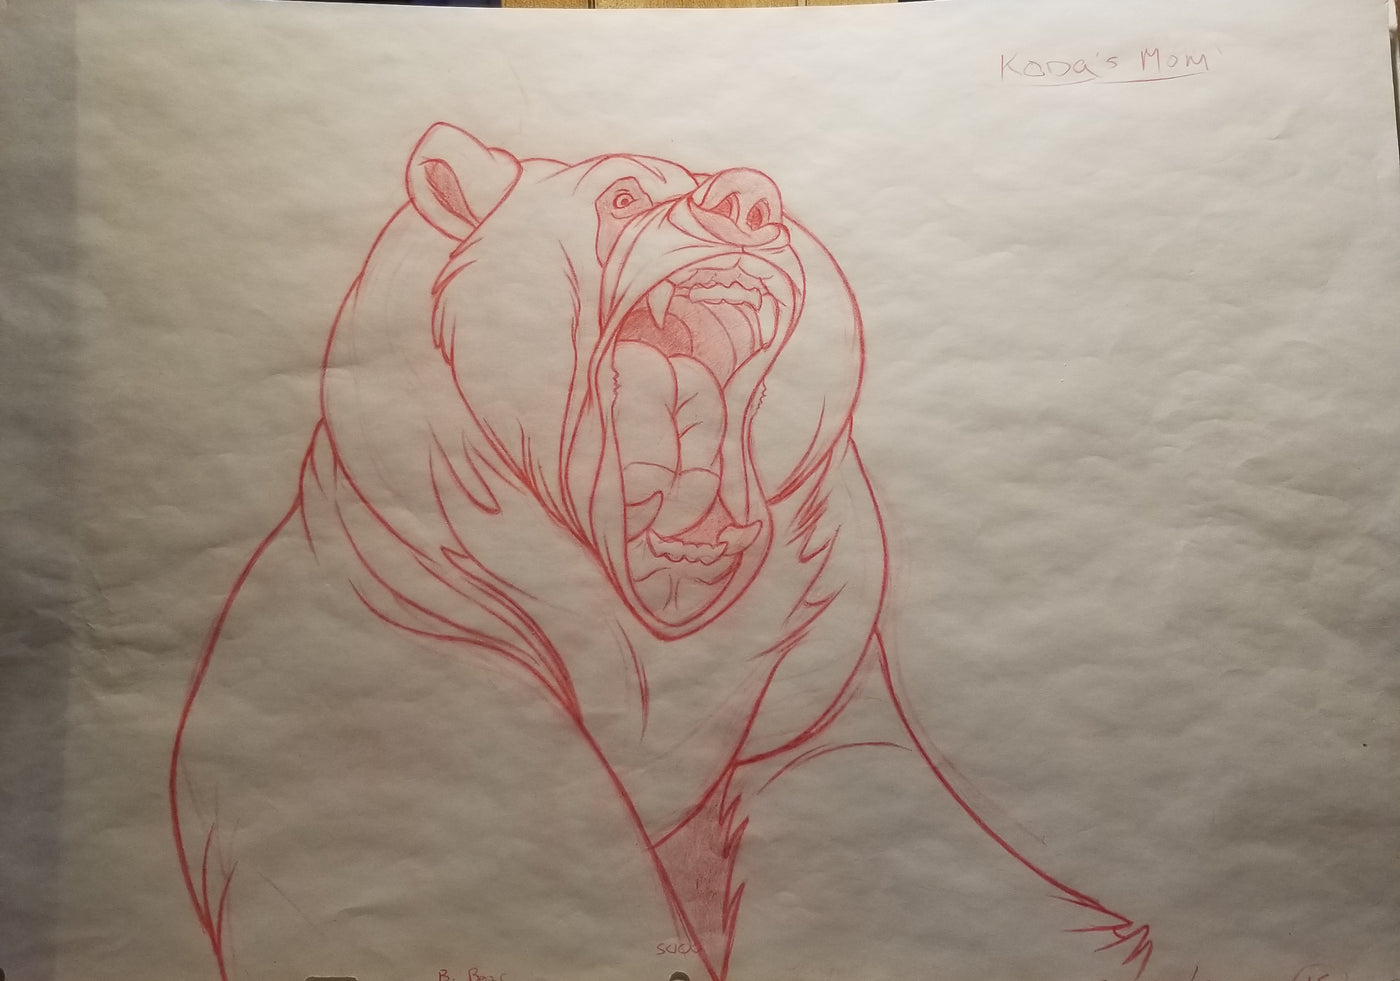 Original Walt Disney Production Drawing from Brother Bear (2003) featuring Koda's mother